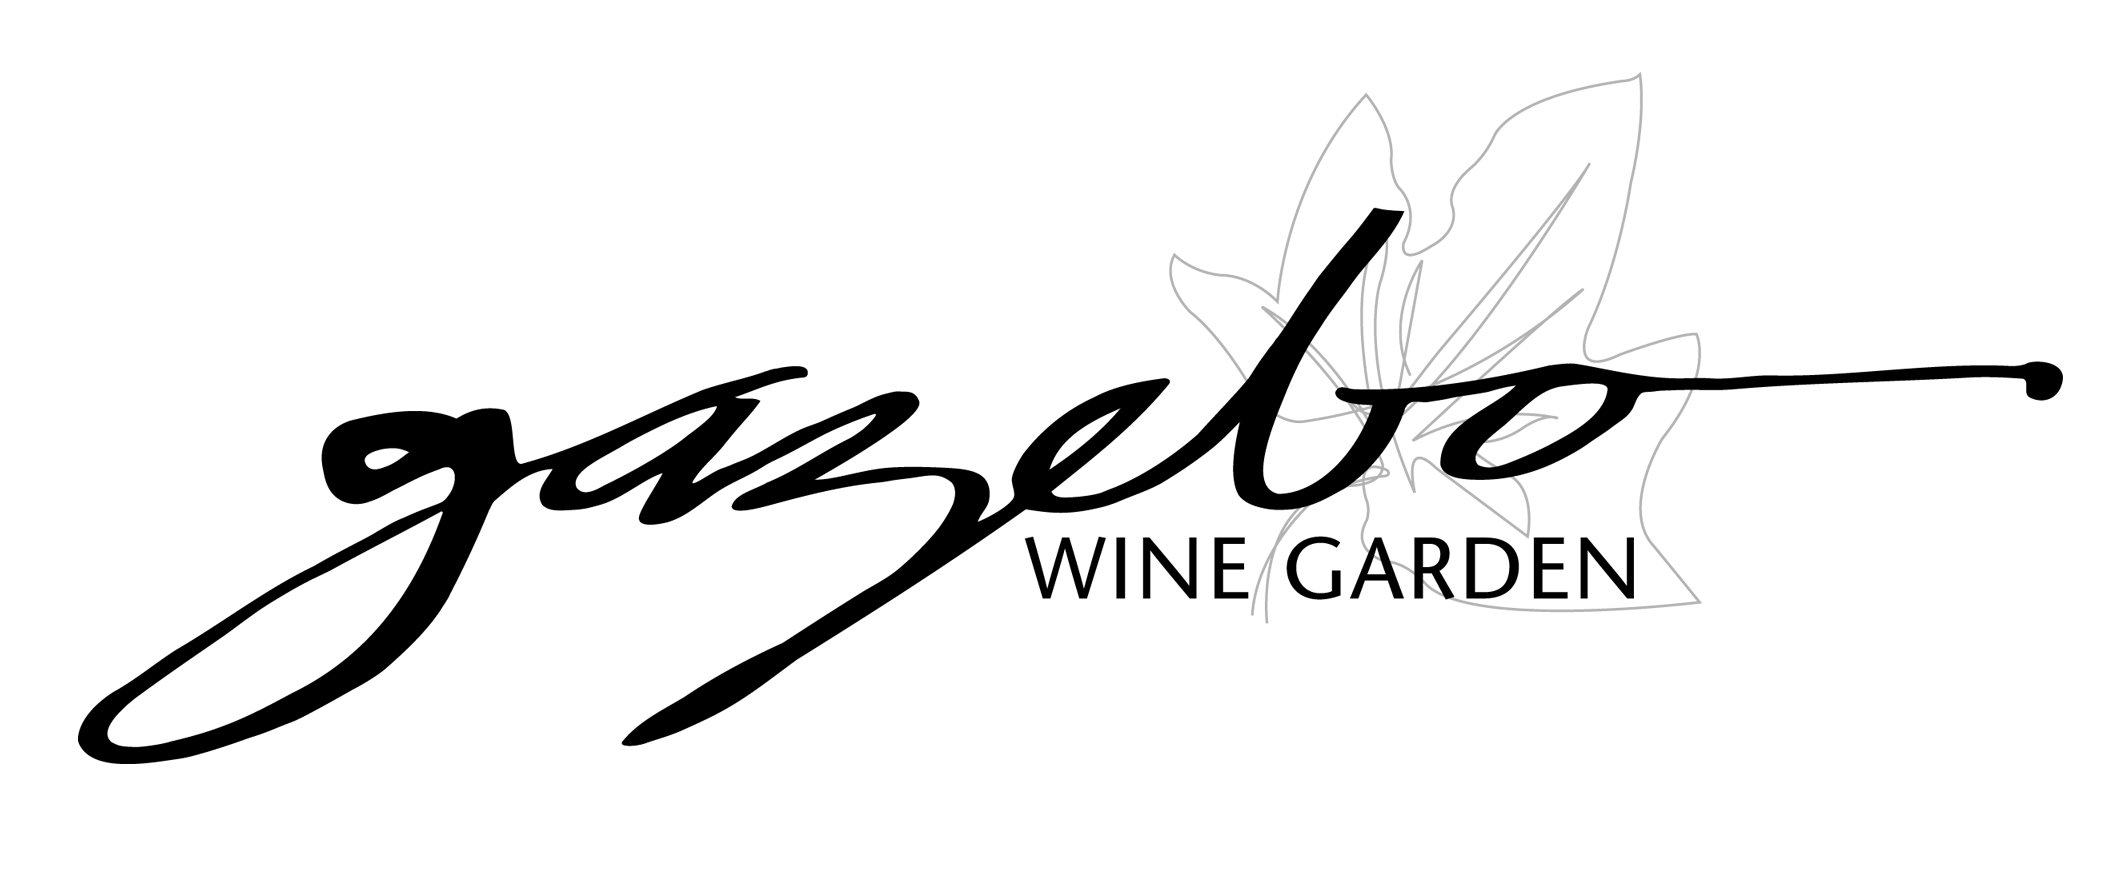 Gazebo Wine Garden